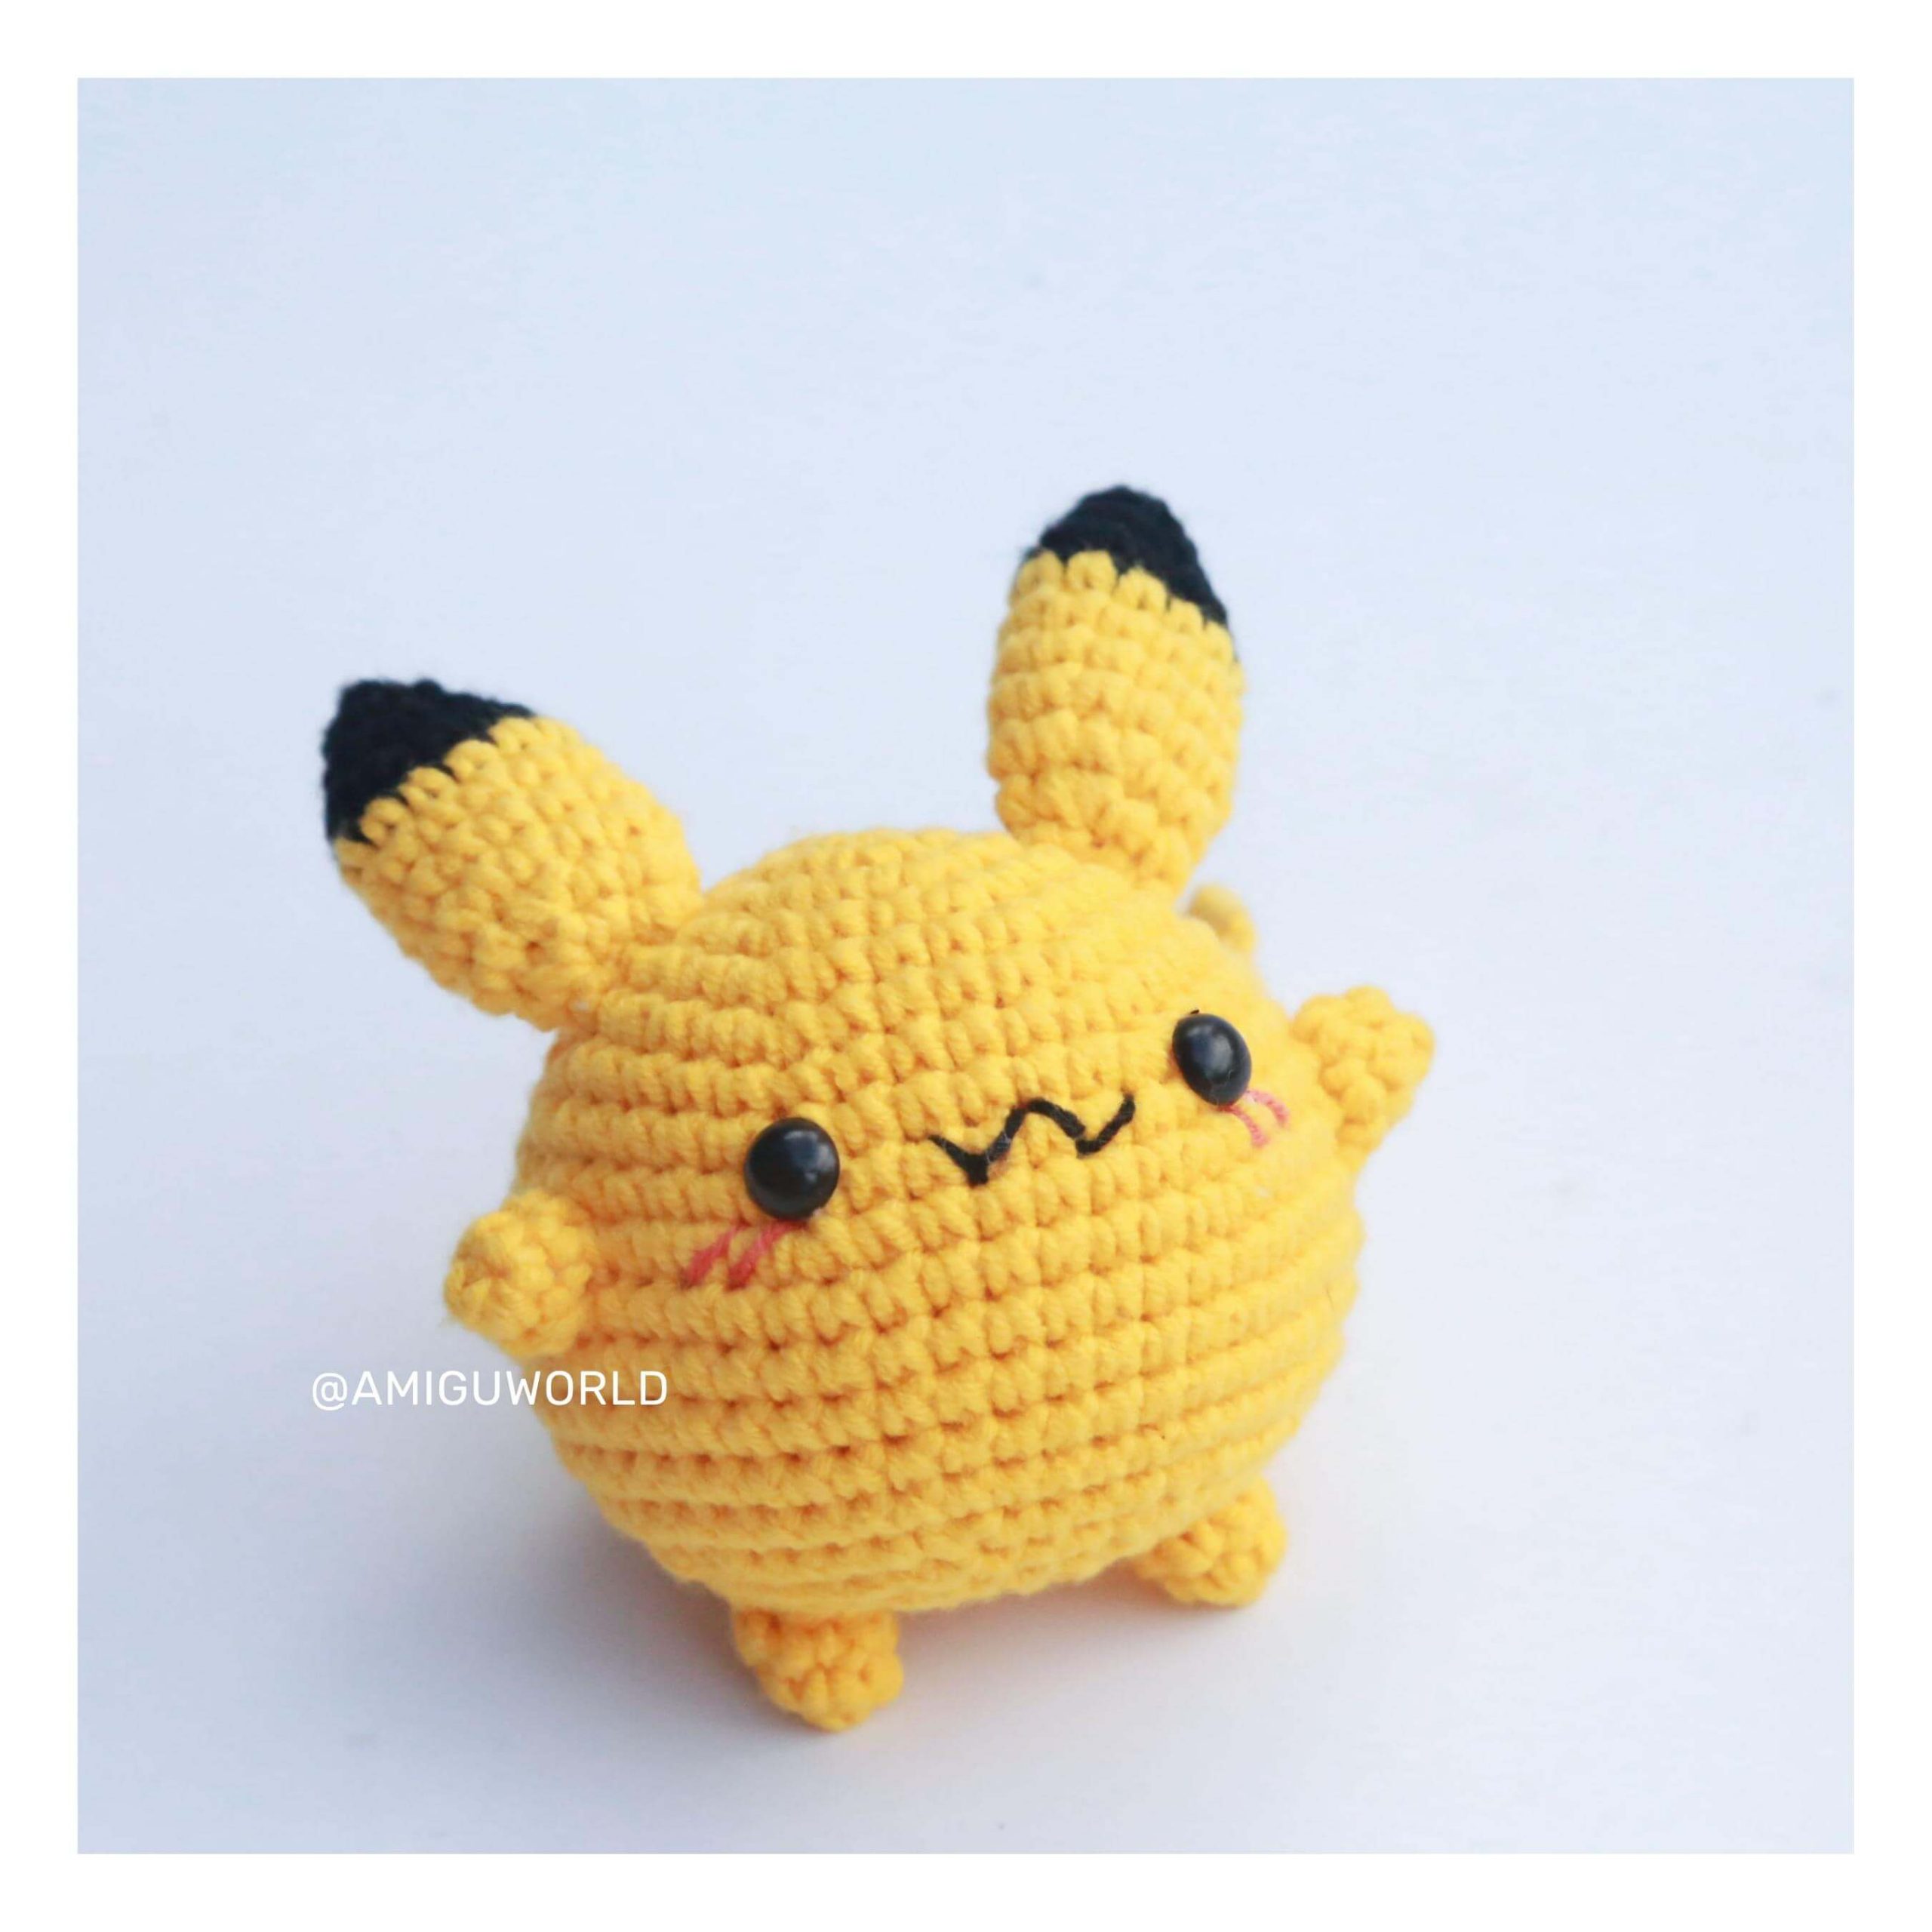 pikachu-amigurumi-crochet-pattern-by-amiguworld (4)